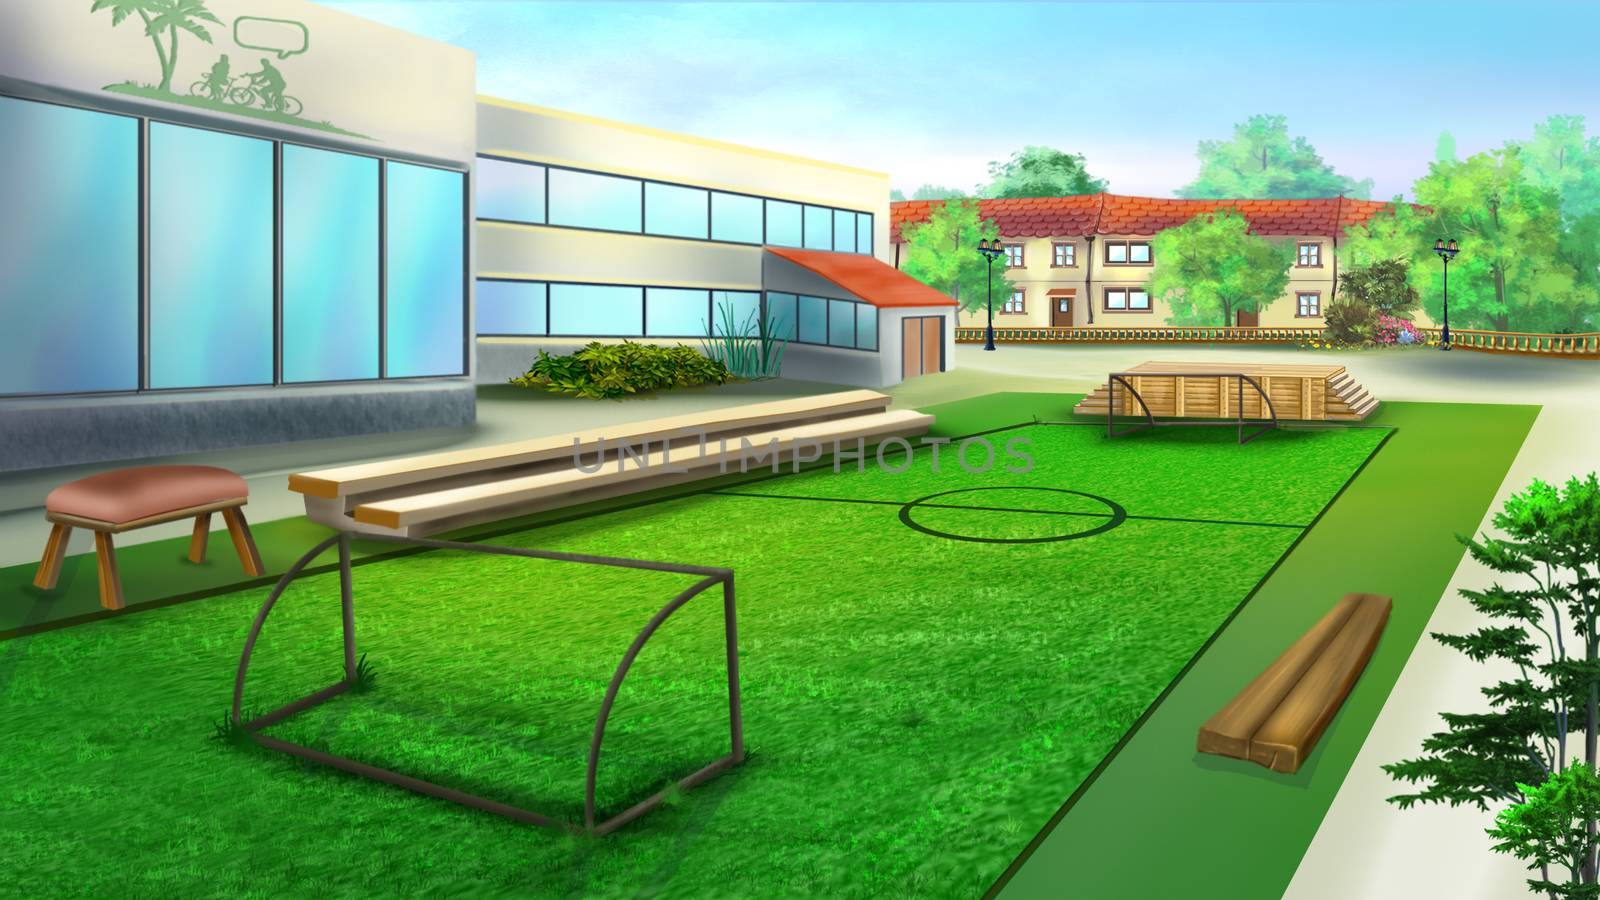 Digital Painting, Illustration of a School sports ground and football stadium. Cartoon Style Artwork Scene, Story Background.